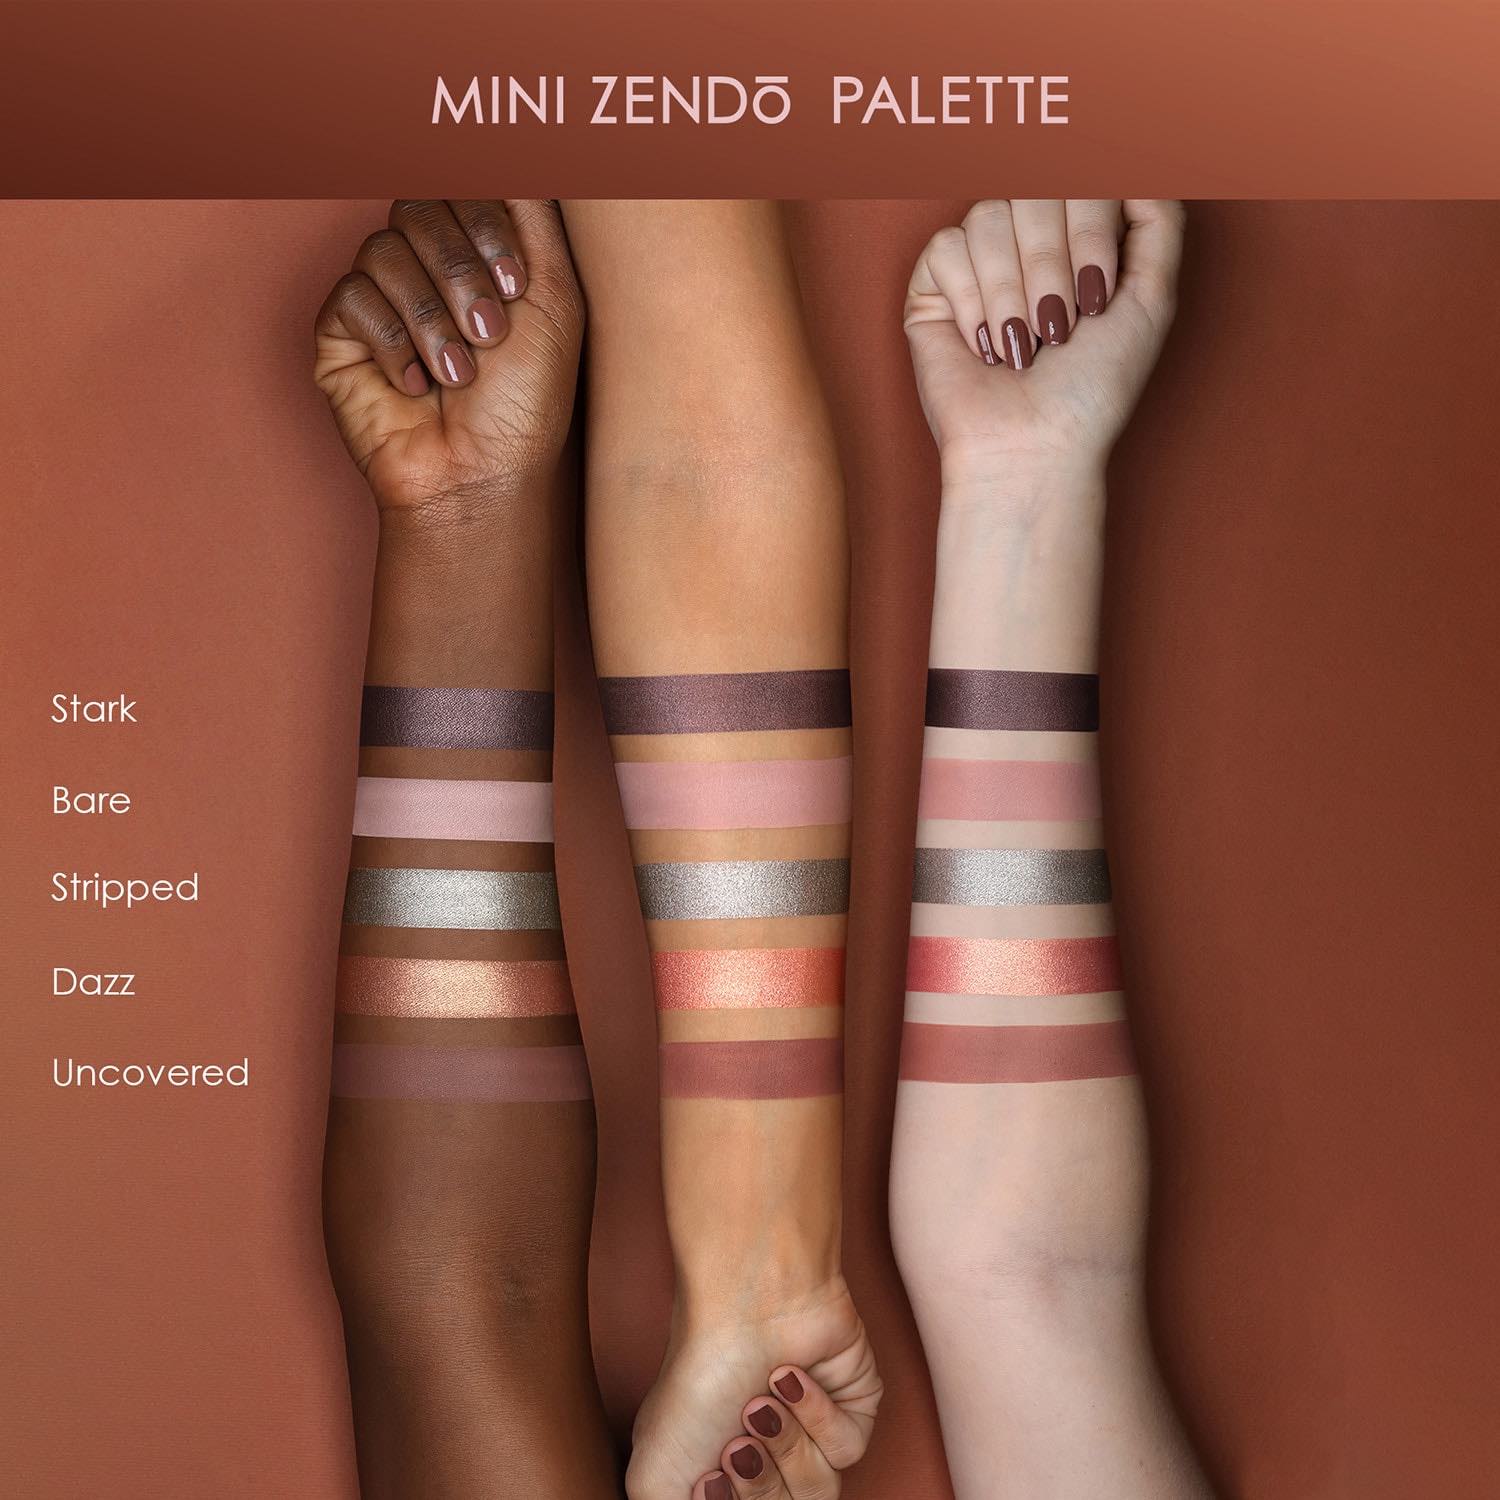 NATASHA DENONA Mini Zendo Palette Swatches Shades Colors Farben Nuancen